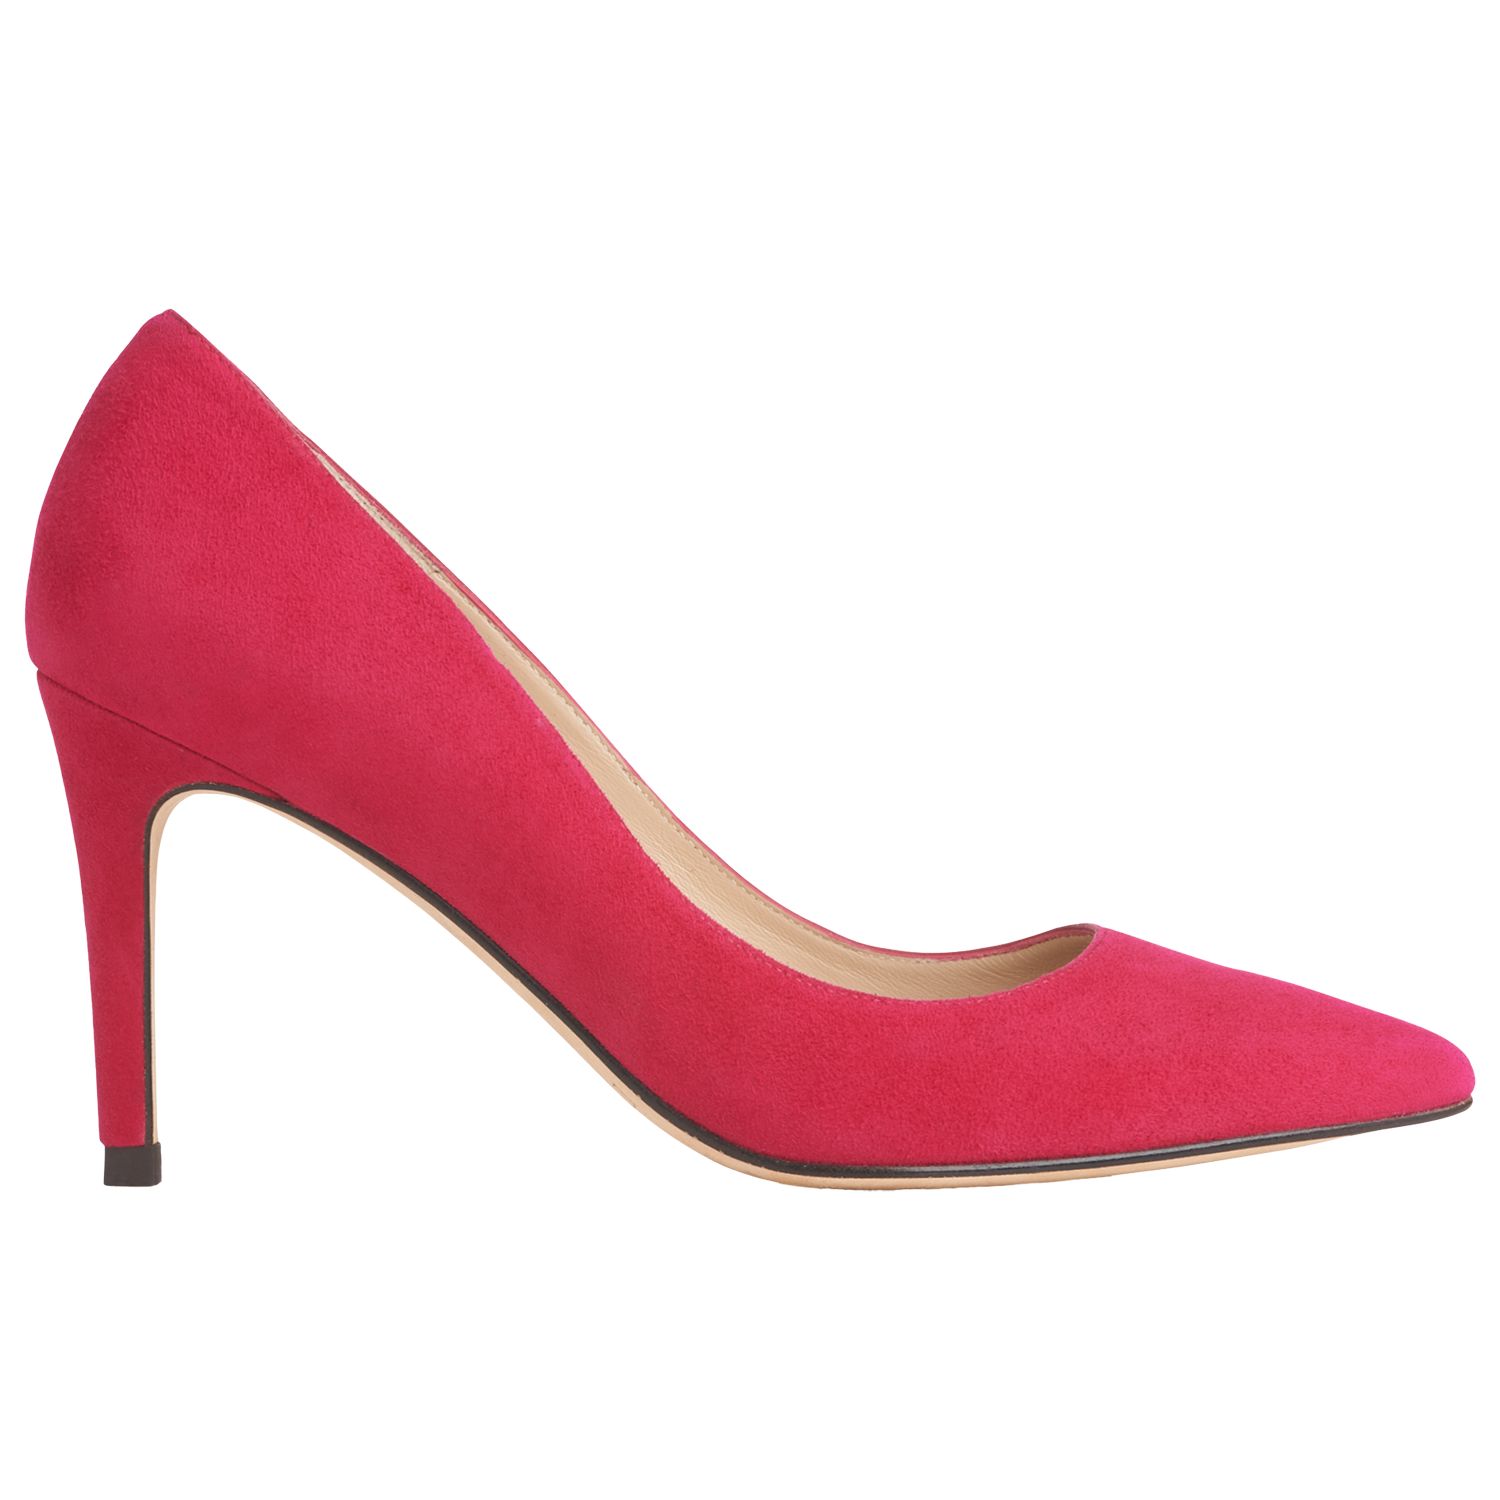 L.K.Bennett Florete Pointed Toe Court Shoes, Pink